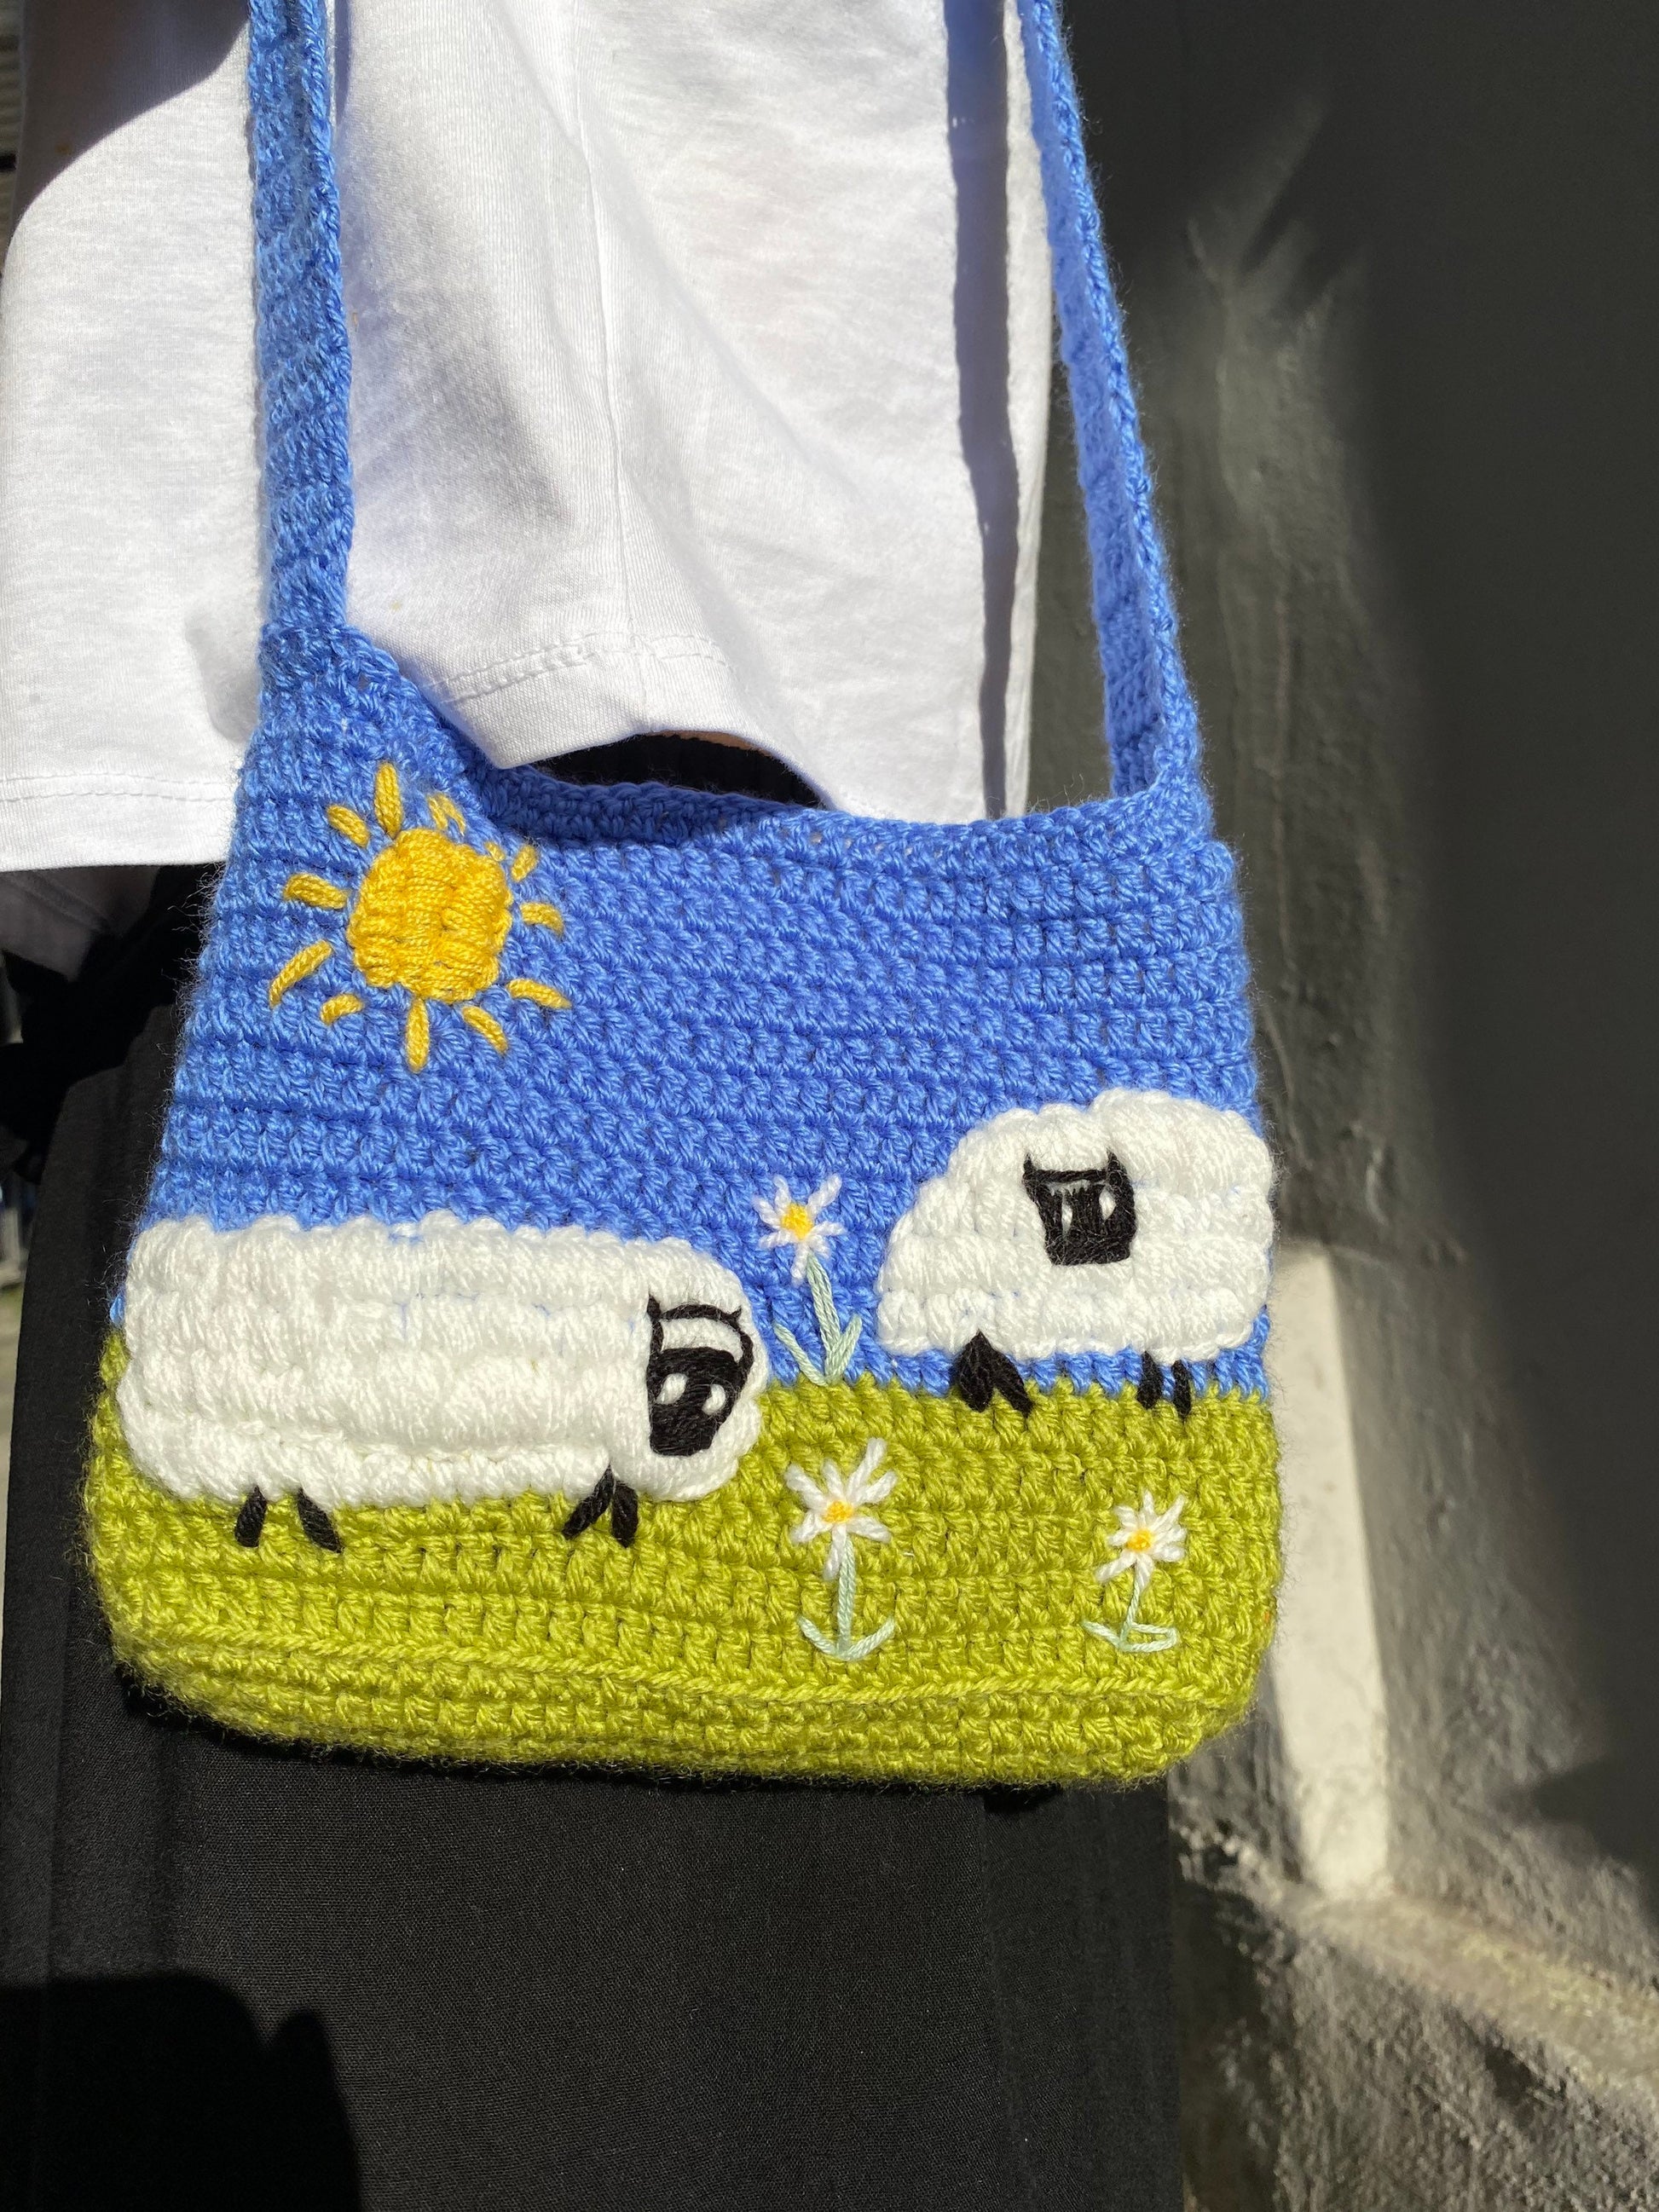  Handmade Purses and Handbags for Women, Crochet